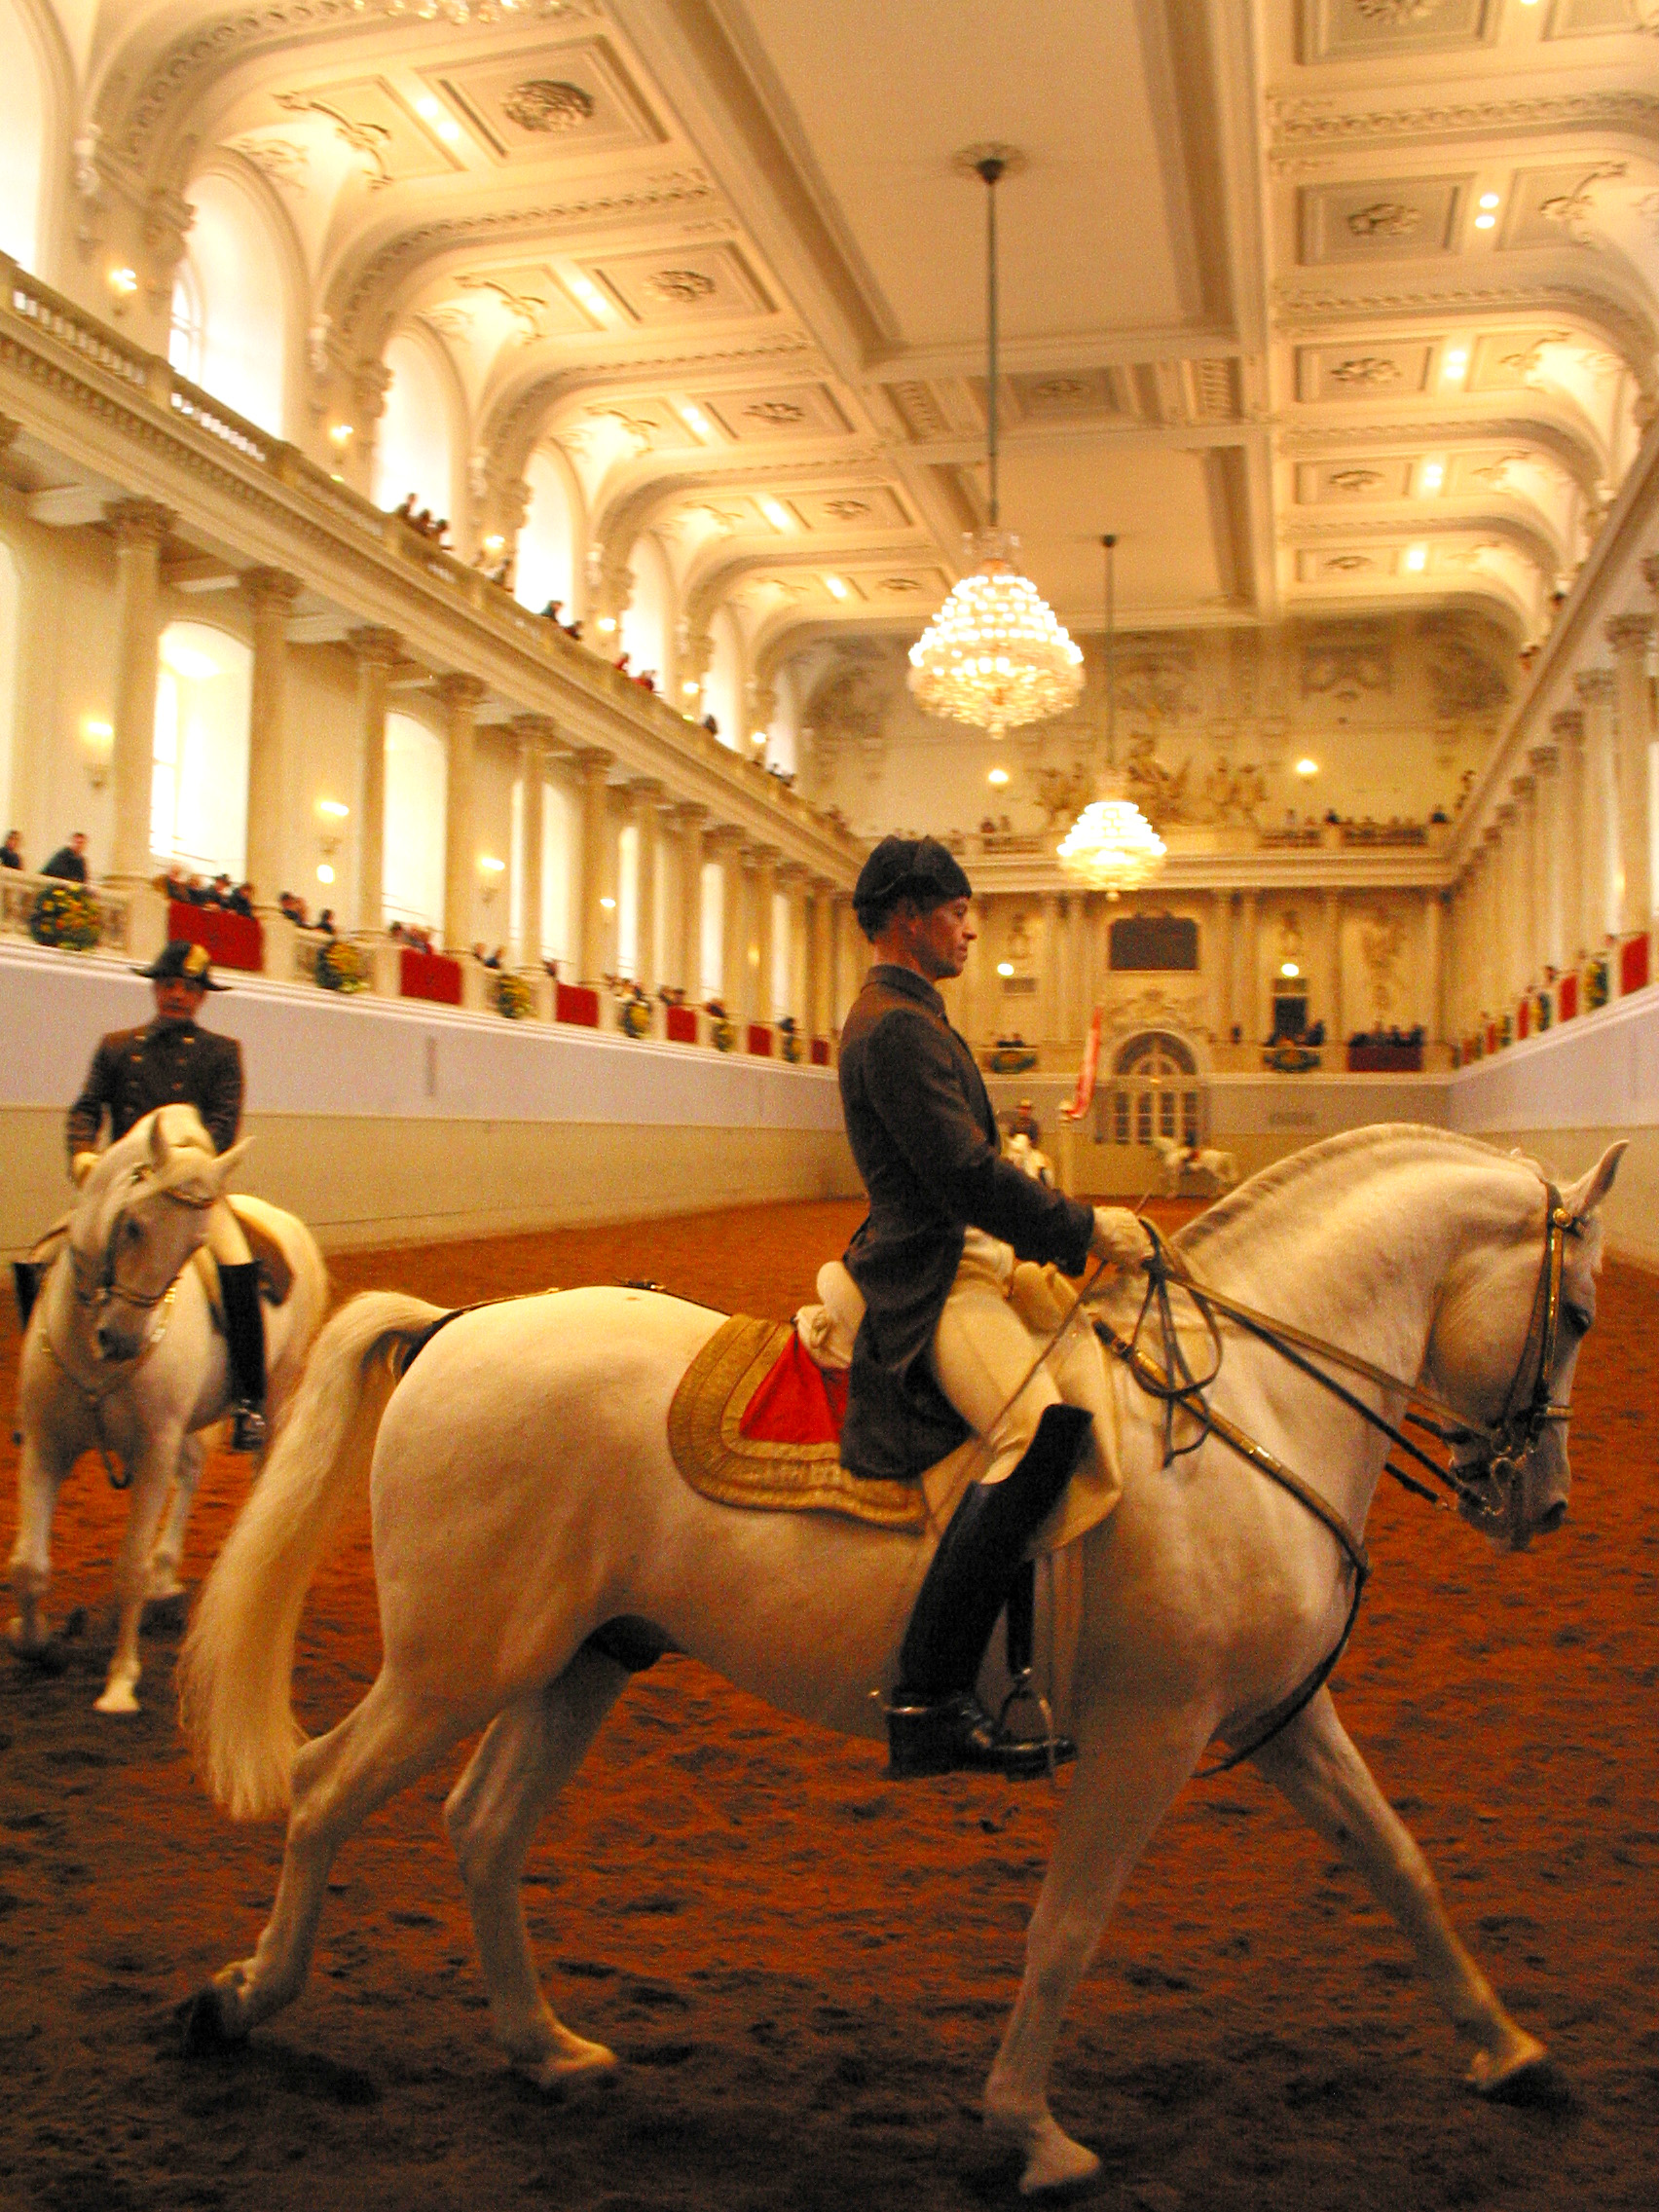 Royal Spanish Riding Academy, Vienna